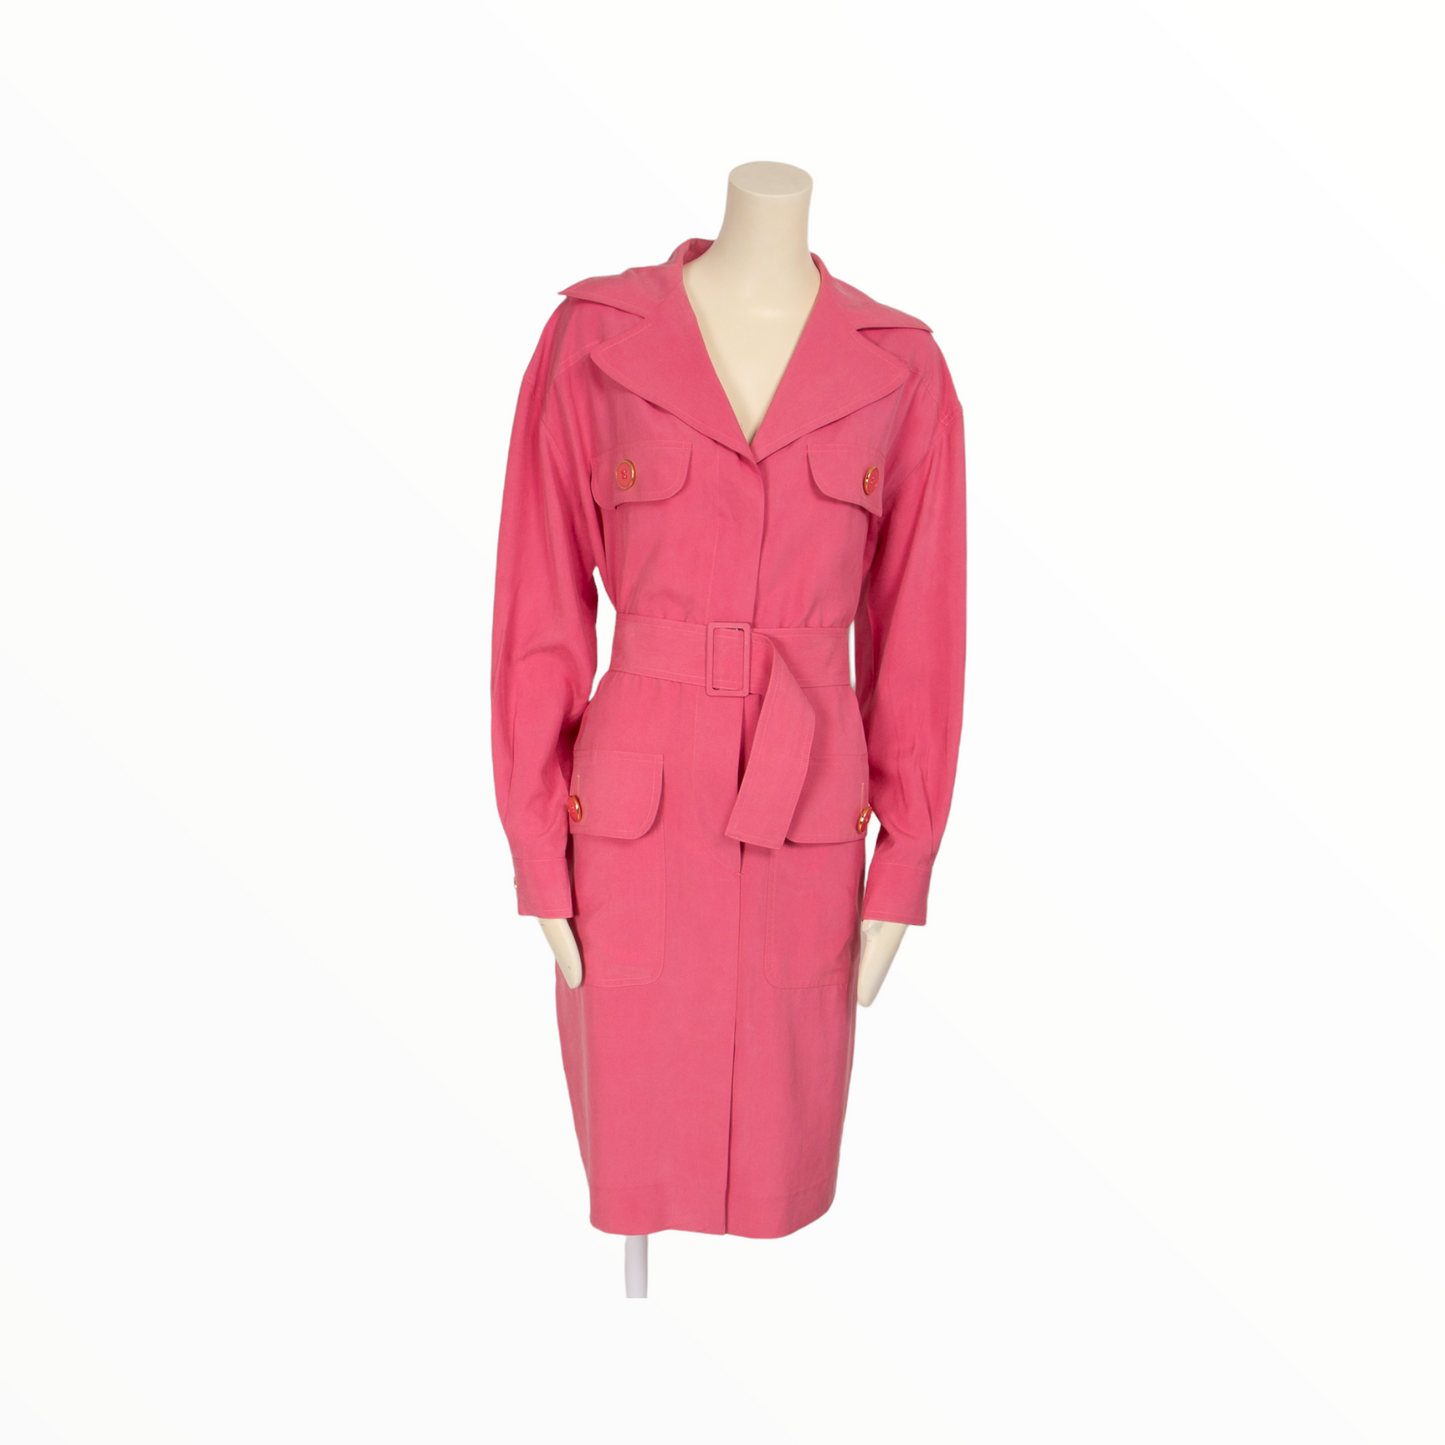 Guy Laroche vintage pink silk shirt dress - L - 1980s